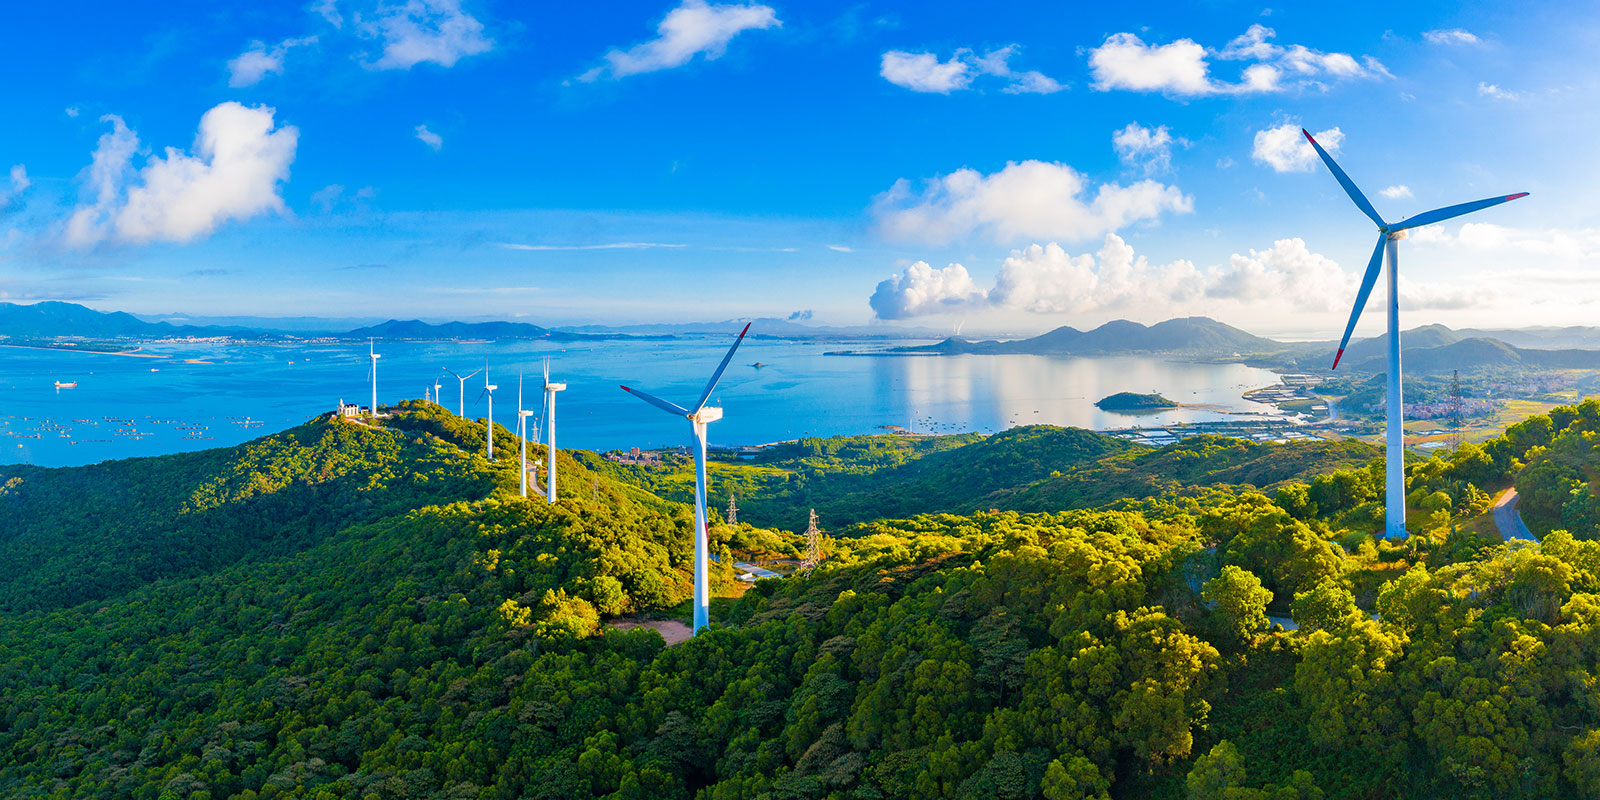 Große Windräder in bergiger Region mit Vegetation auf der Insel Hailing, Yangjiang, Provinz Guangdong, China